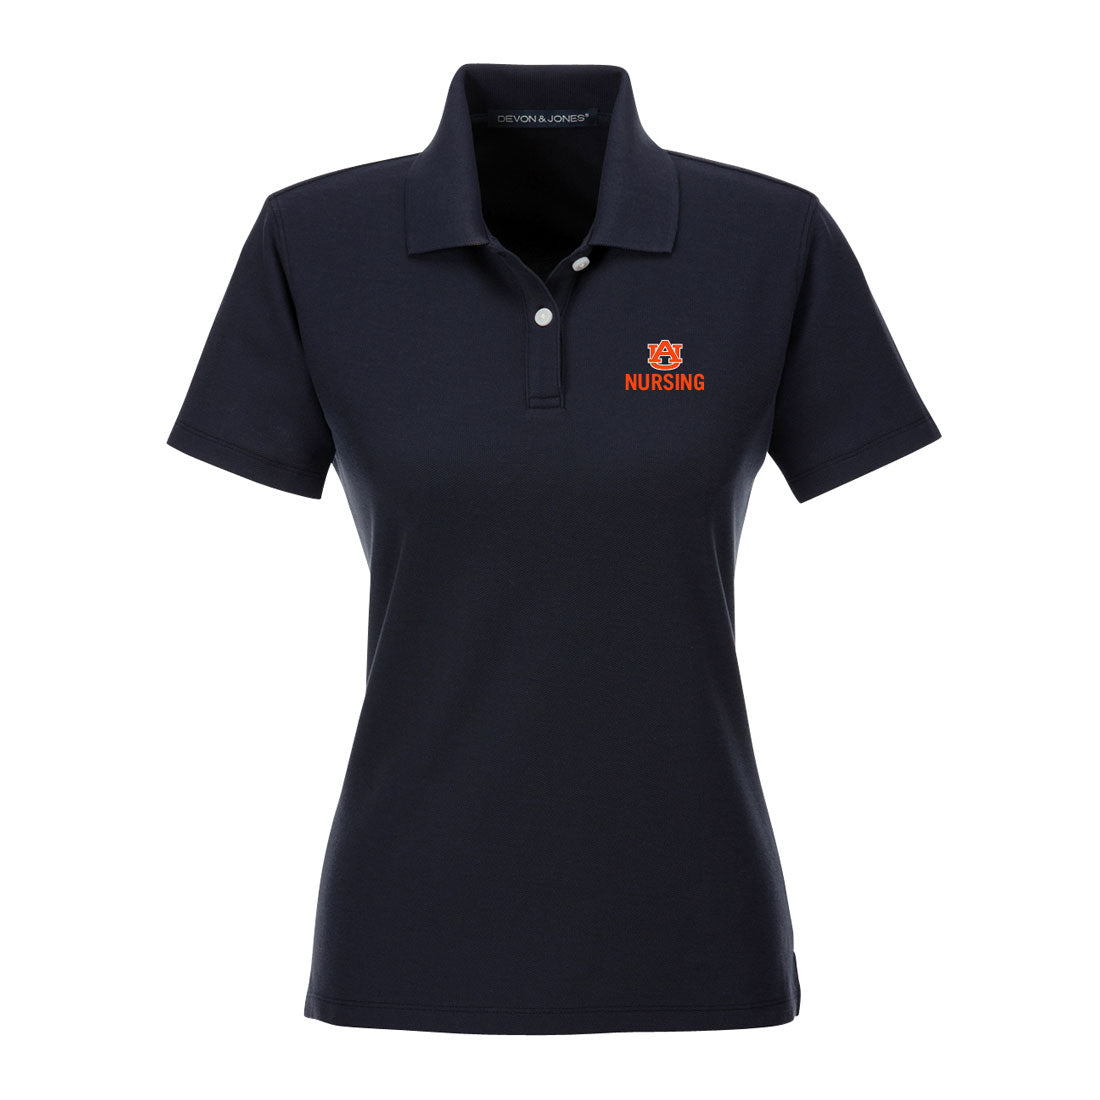 AU Nursing Women's Performance Golf Shirt